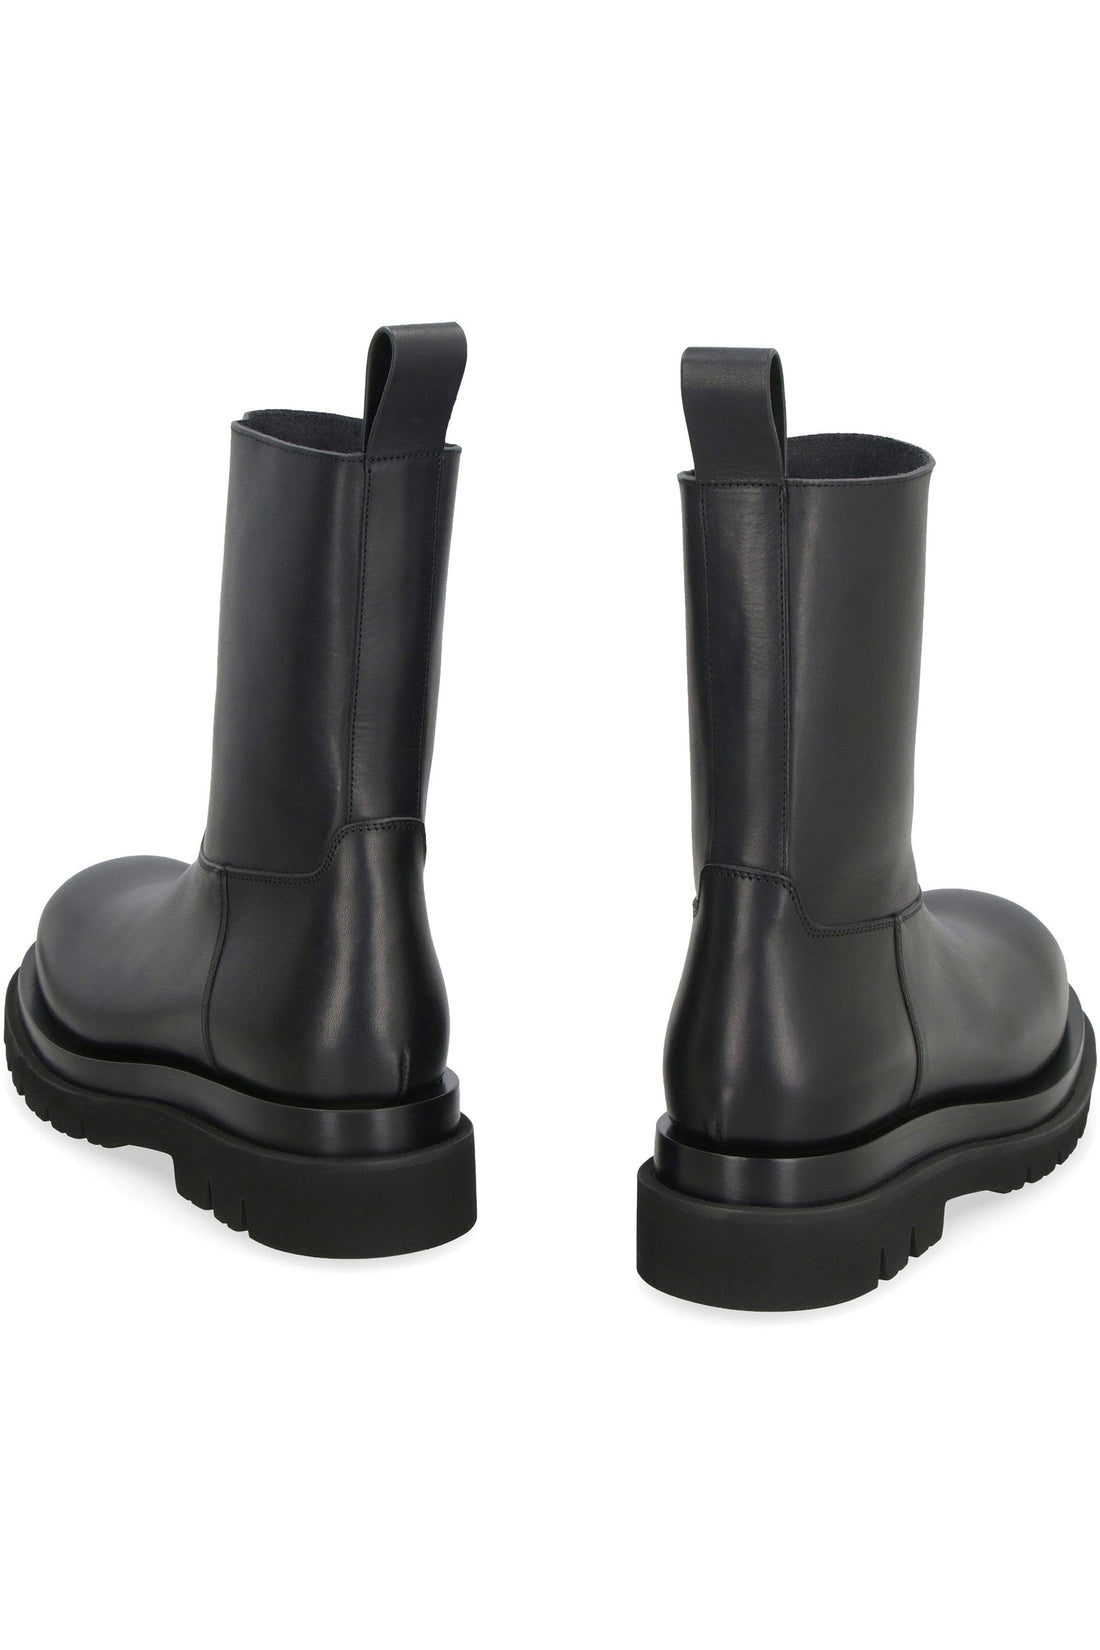 Bottega Veneta-OUTLET-SALE-Lug leather ankle boots-ARCHIVIST